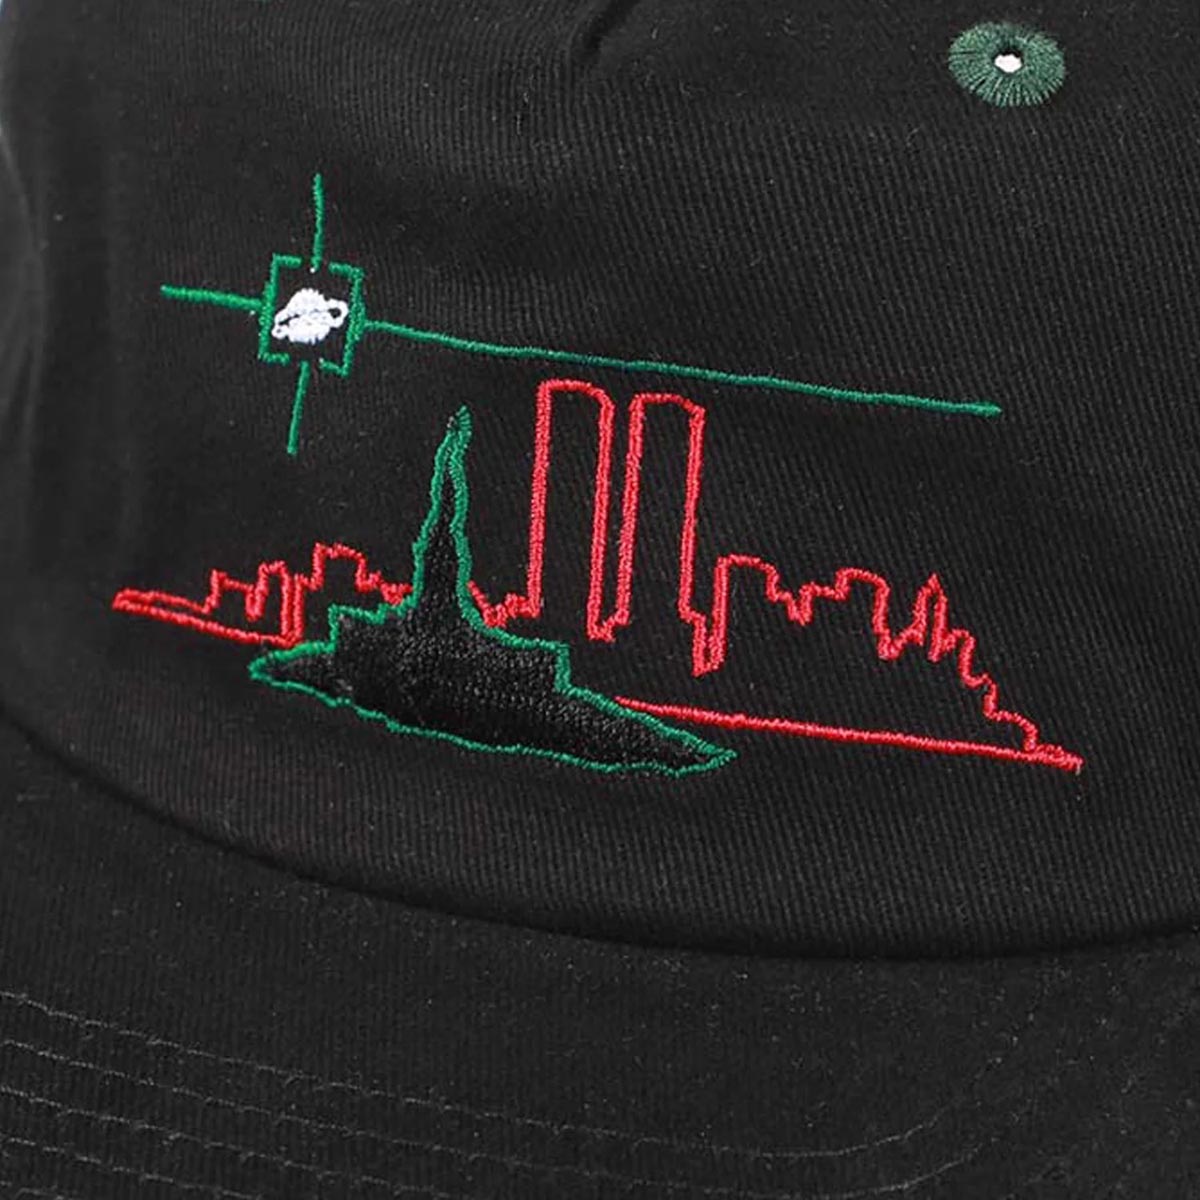 Theories Crosshairs Snapback Hat - Black/Green image 3